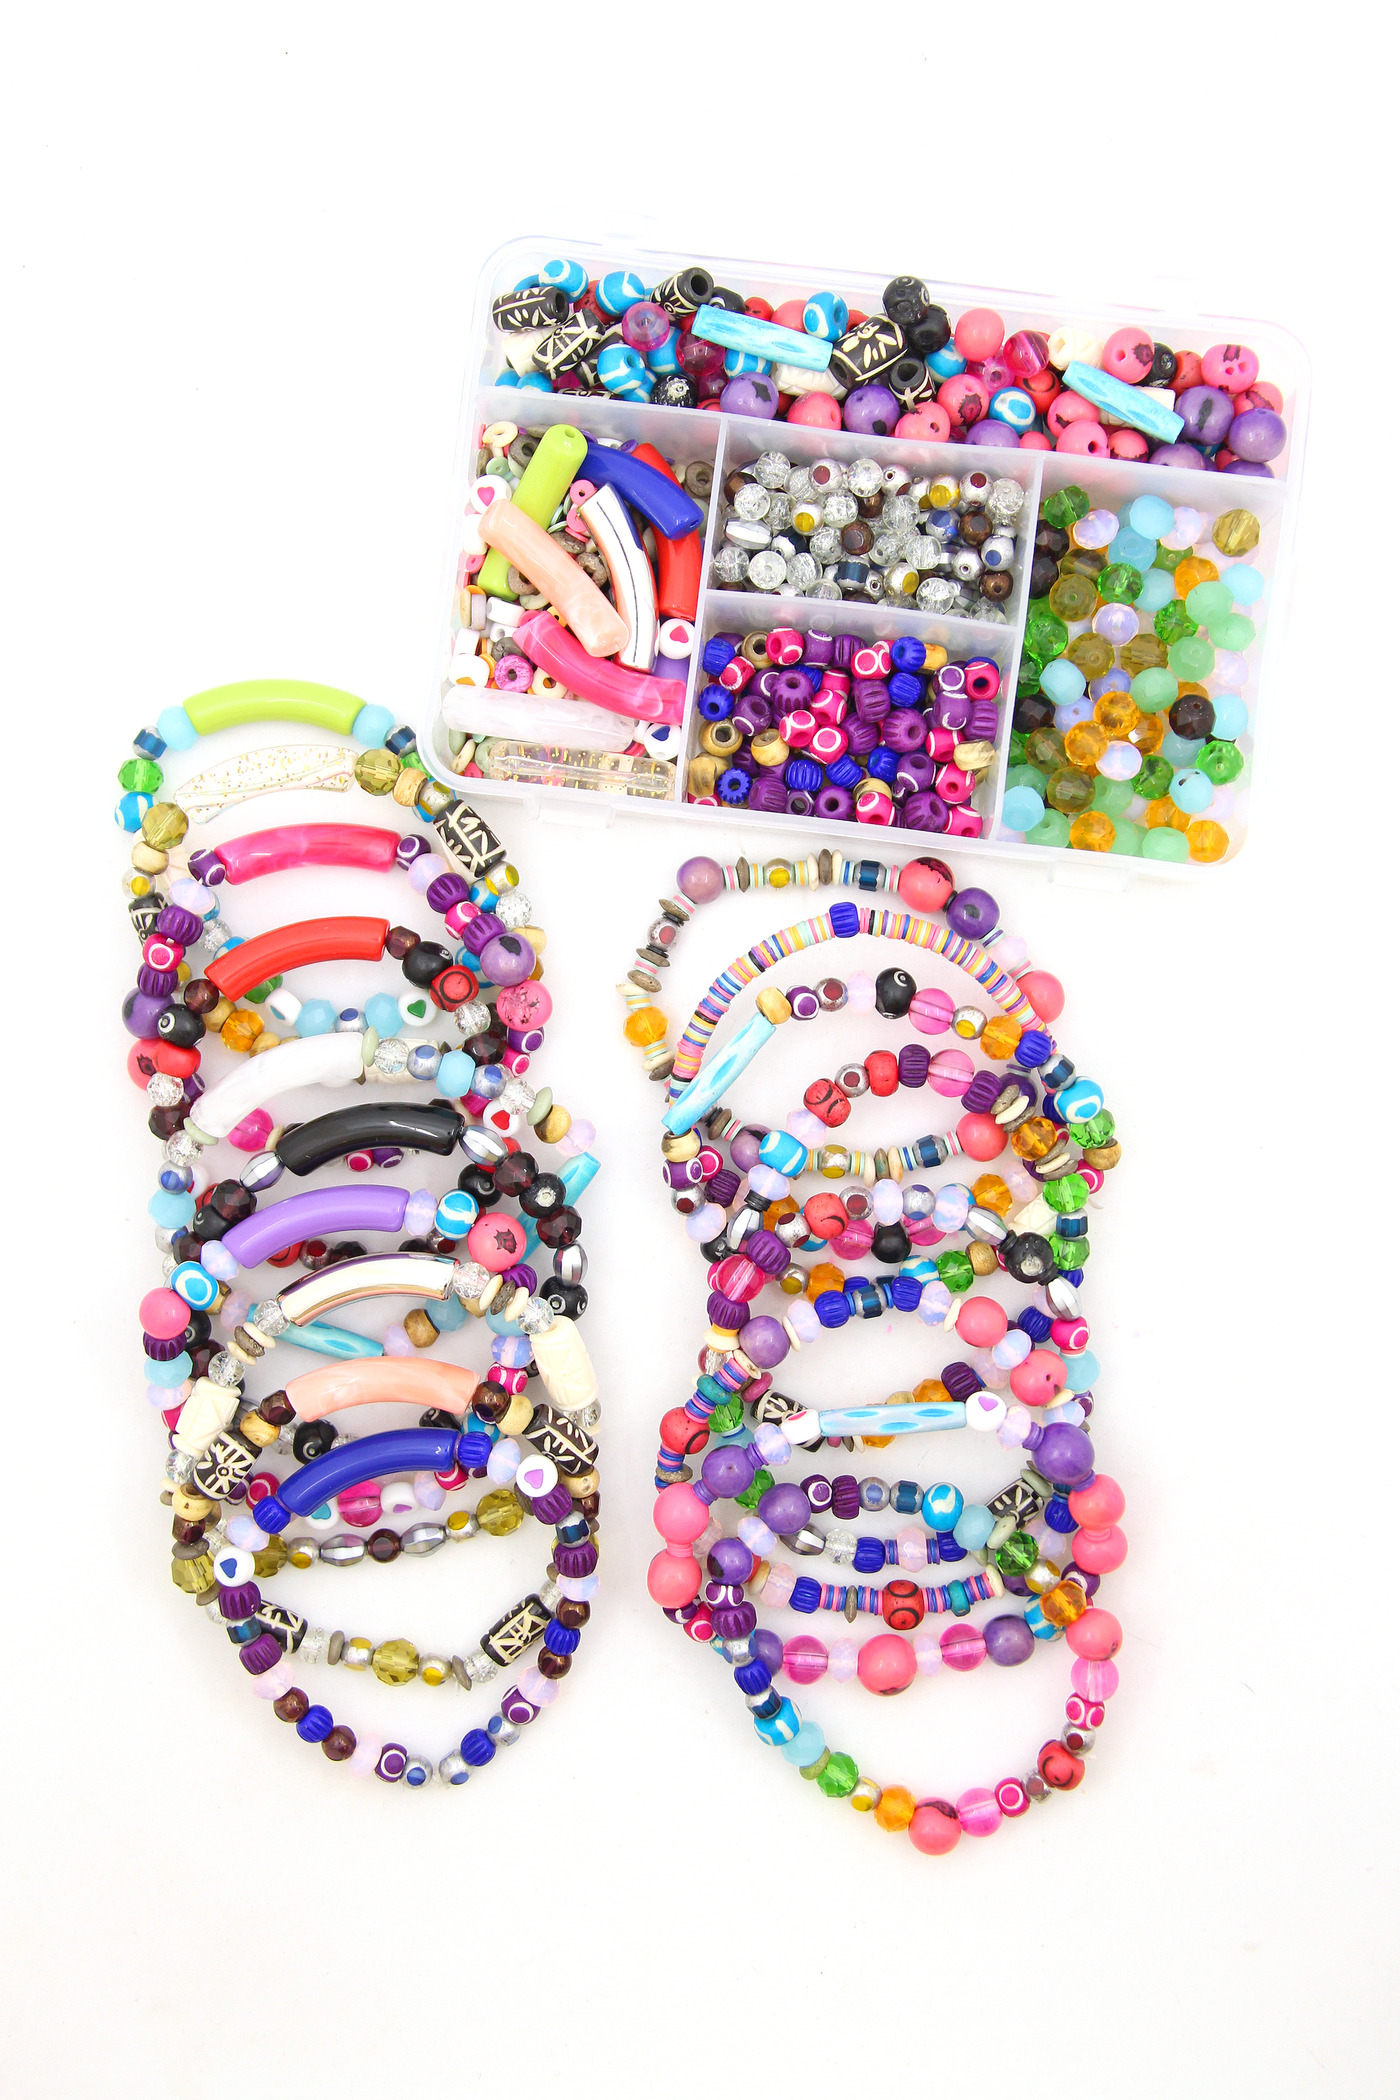  Swiftbuyo Friendship Bracelet Making Kit for Girls